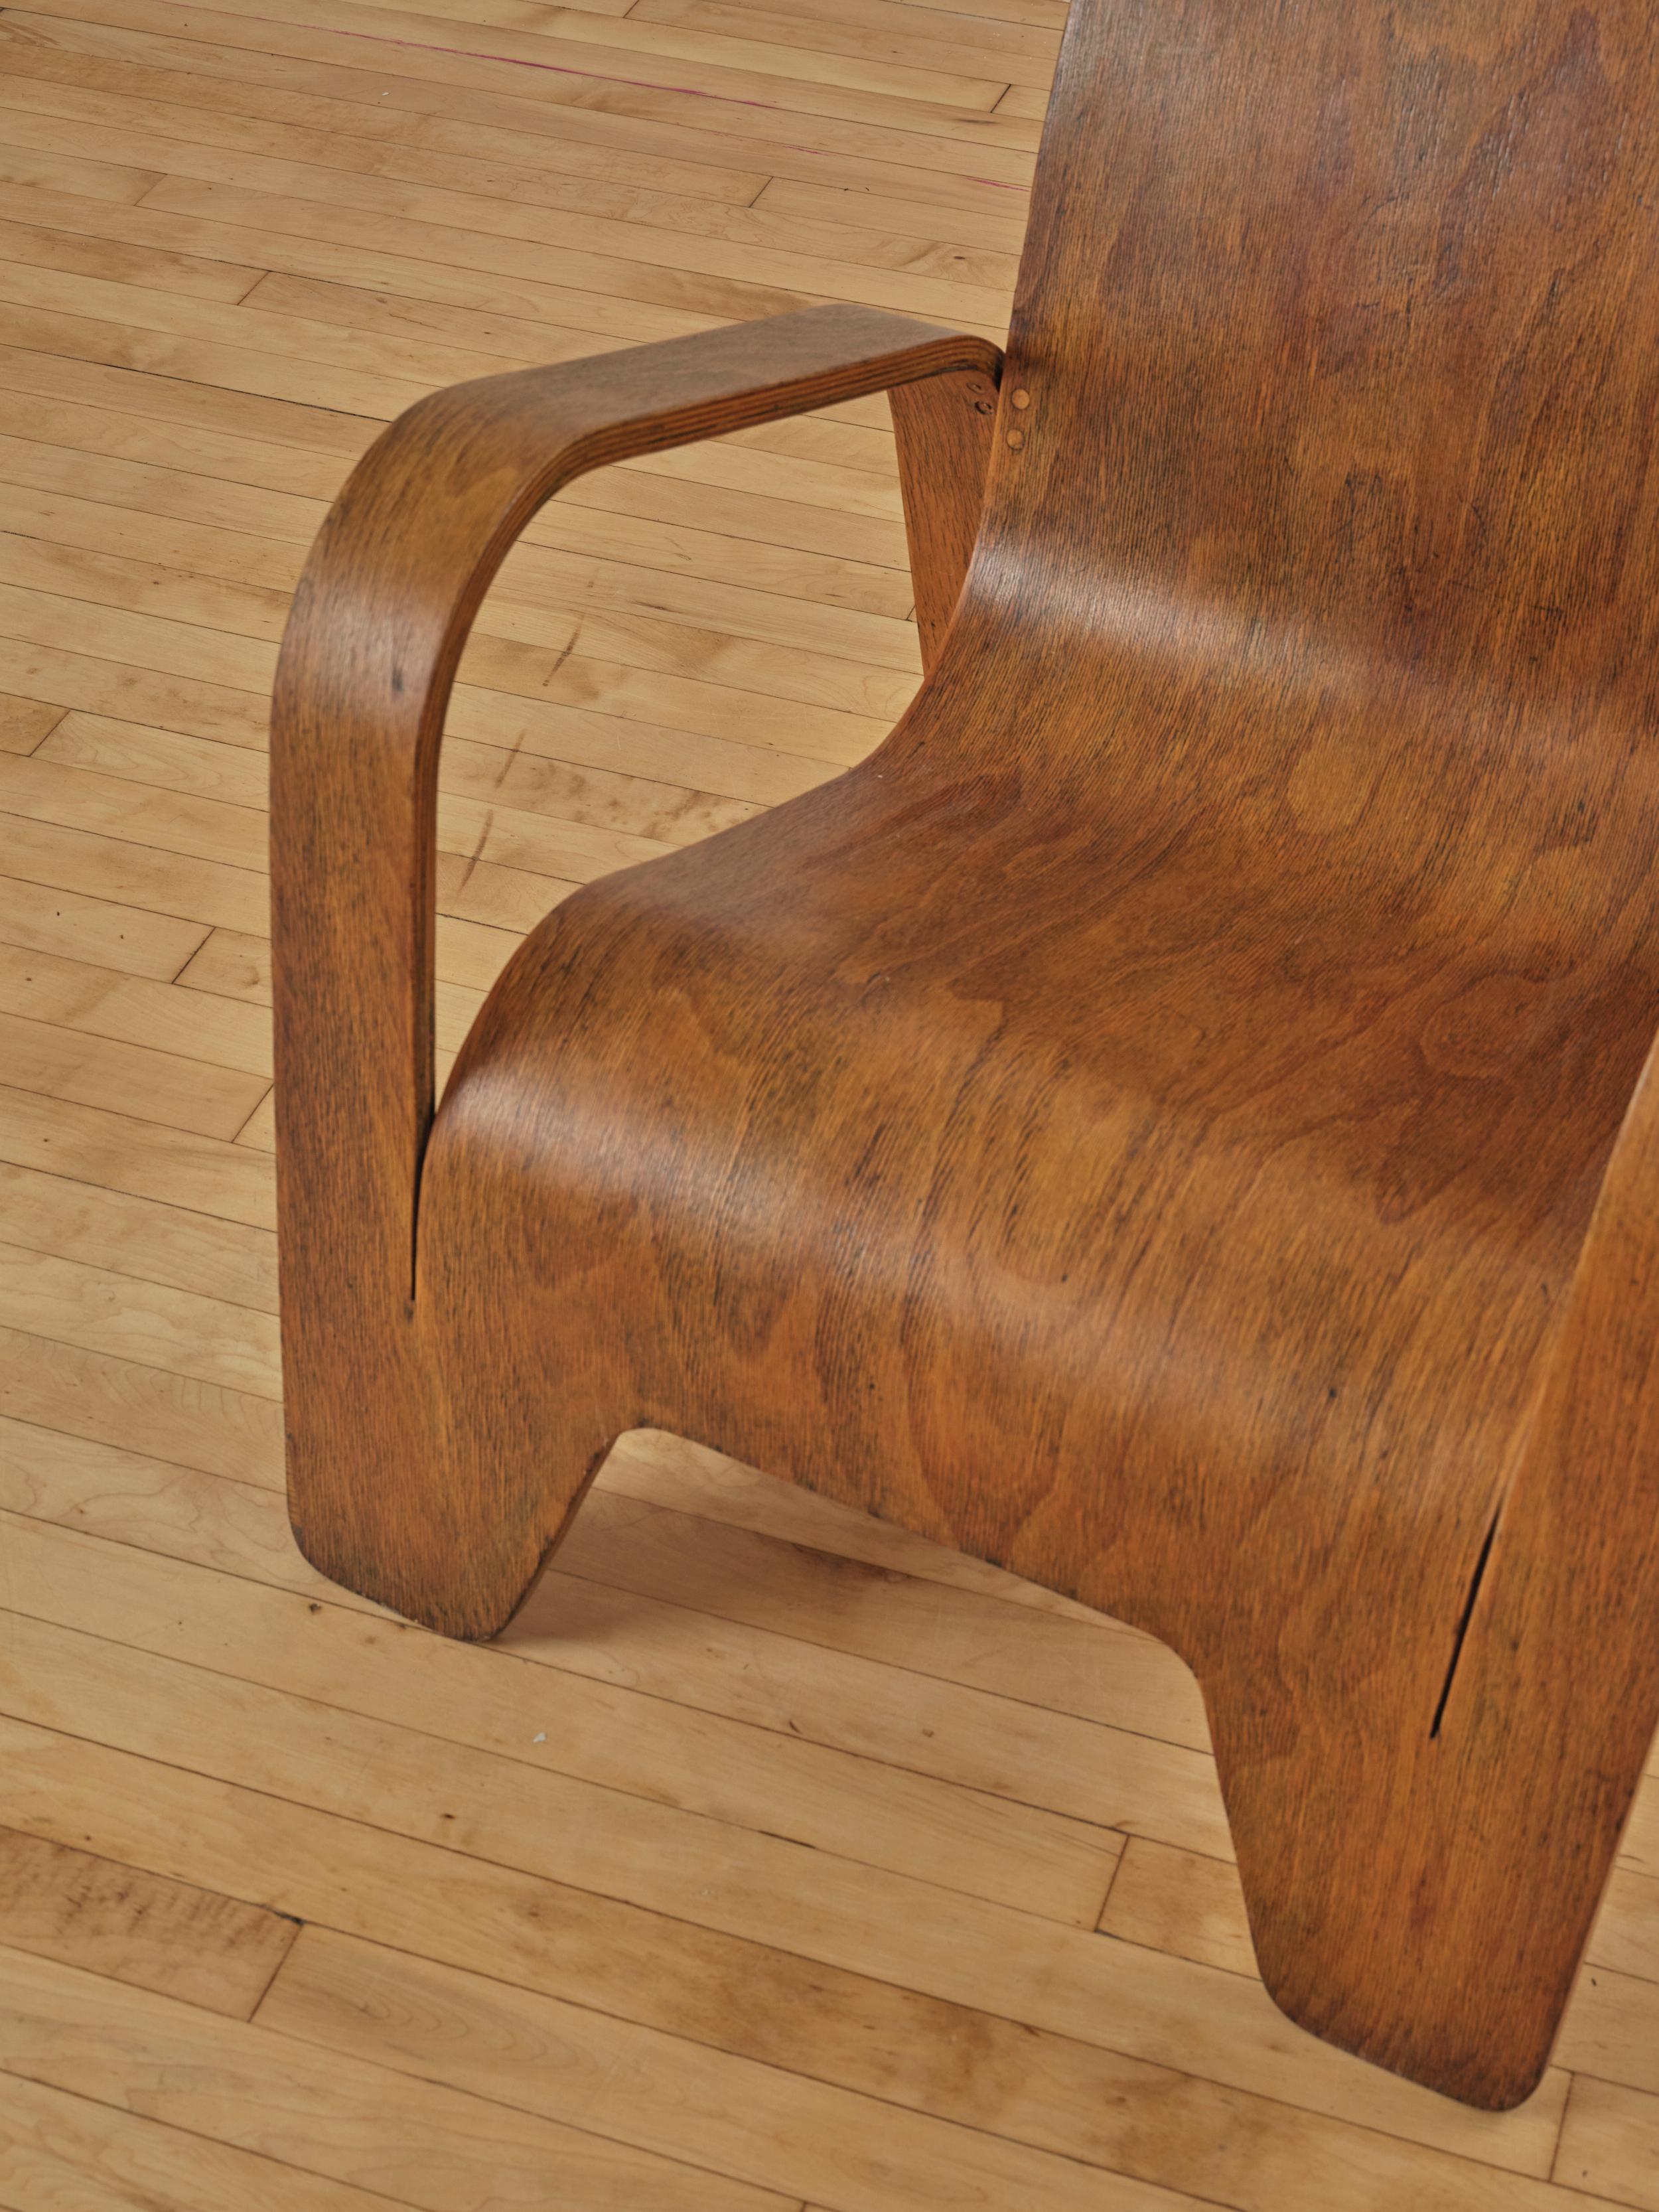  LaWo1 Wooden Lounge Chair by Han Pieck for Lawo Ommen Bon état - En vente à Long Island City, NY